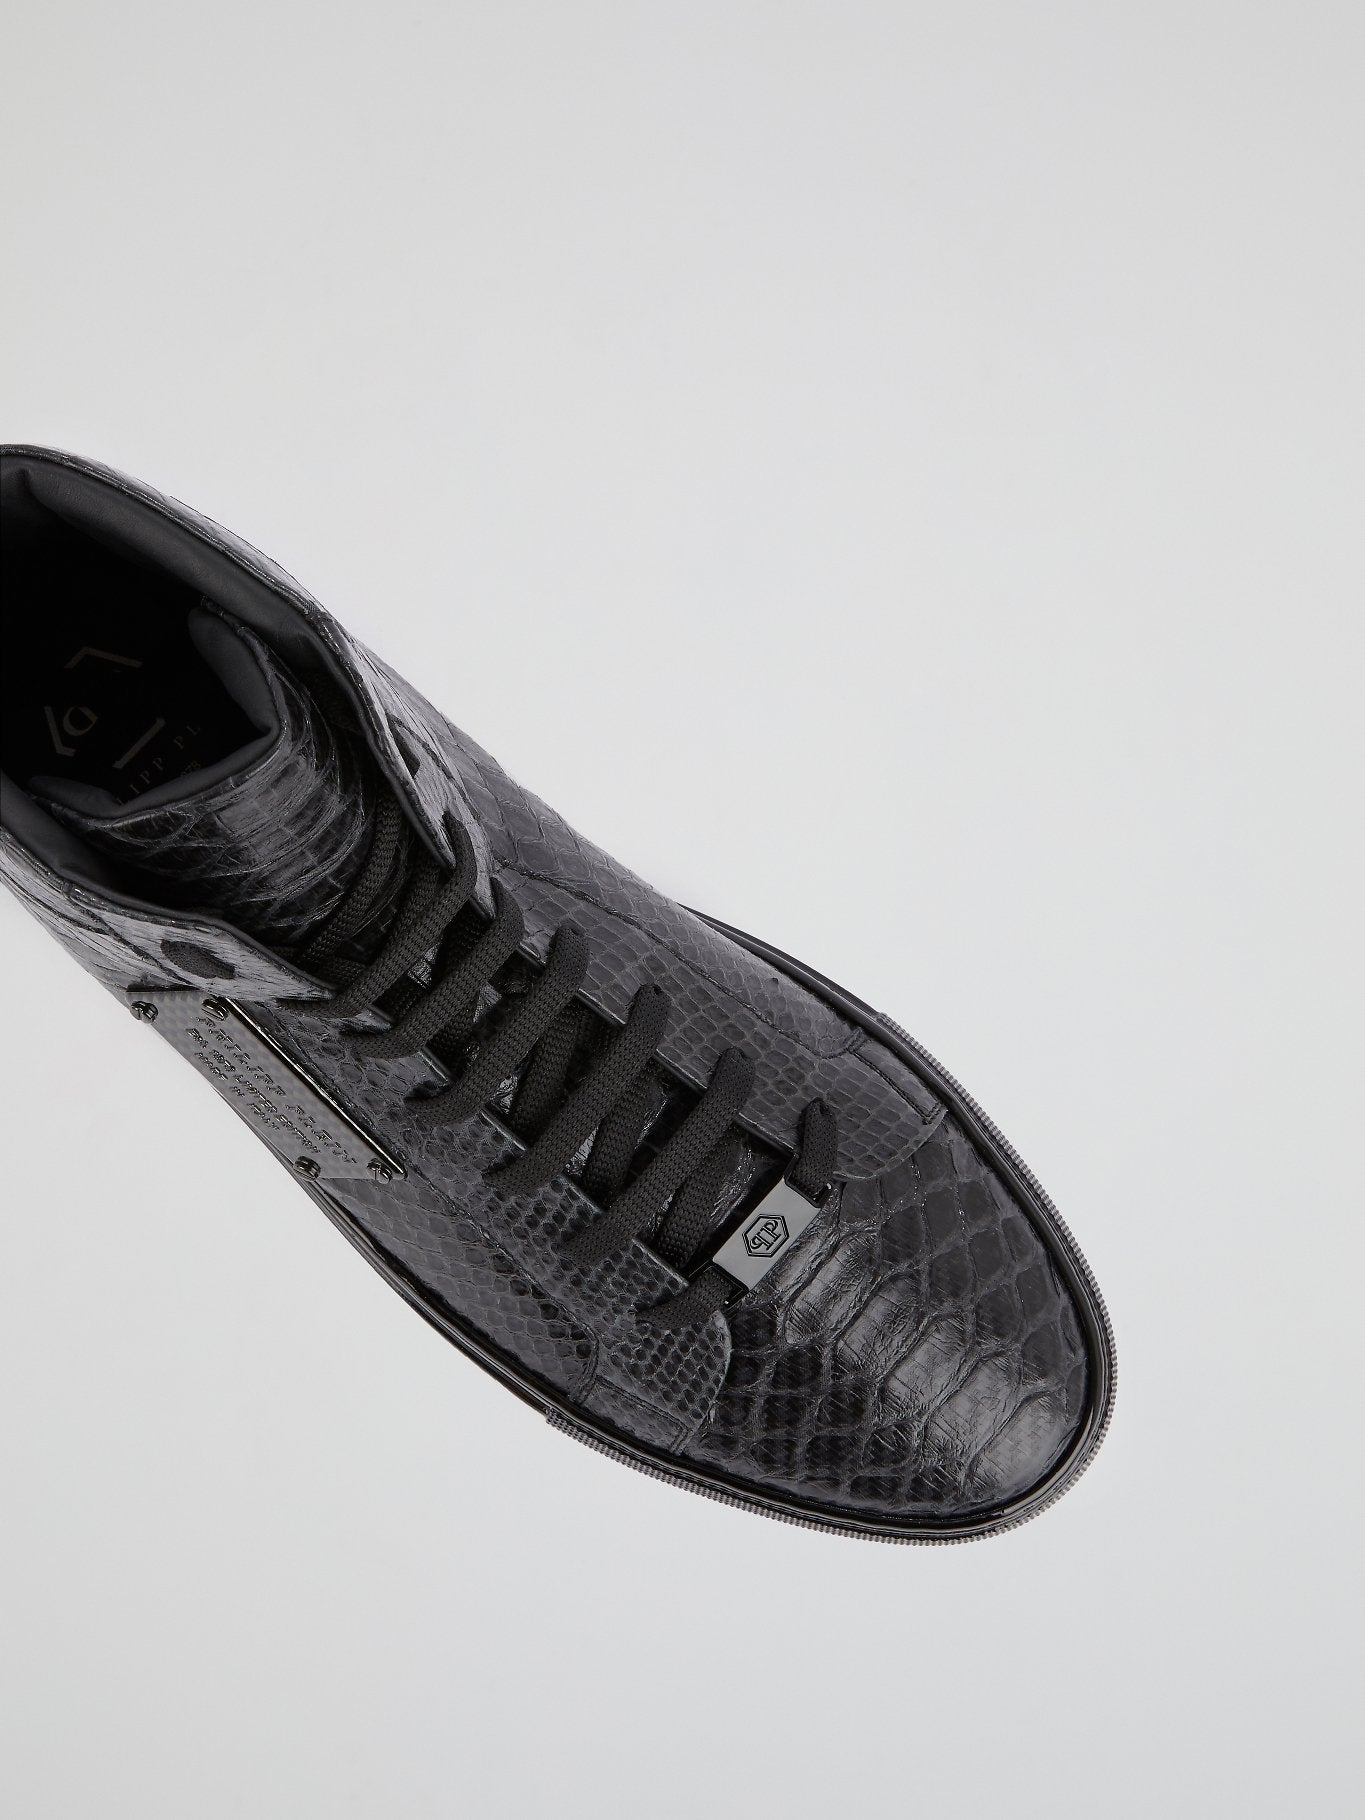 Buy Puma Unisex Adult Breaker Mid Reptile P Black Sneakers-6 UK (39 EU) (7  US) (36956402) at Amazon.in